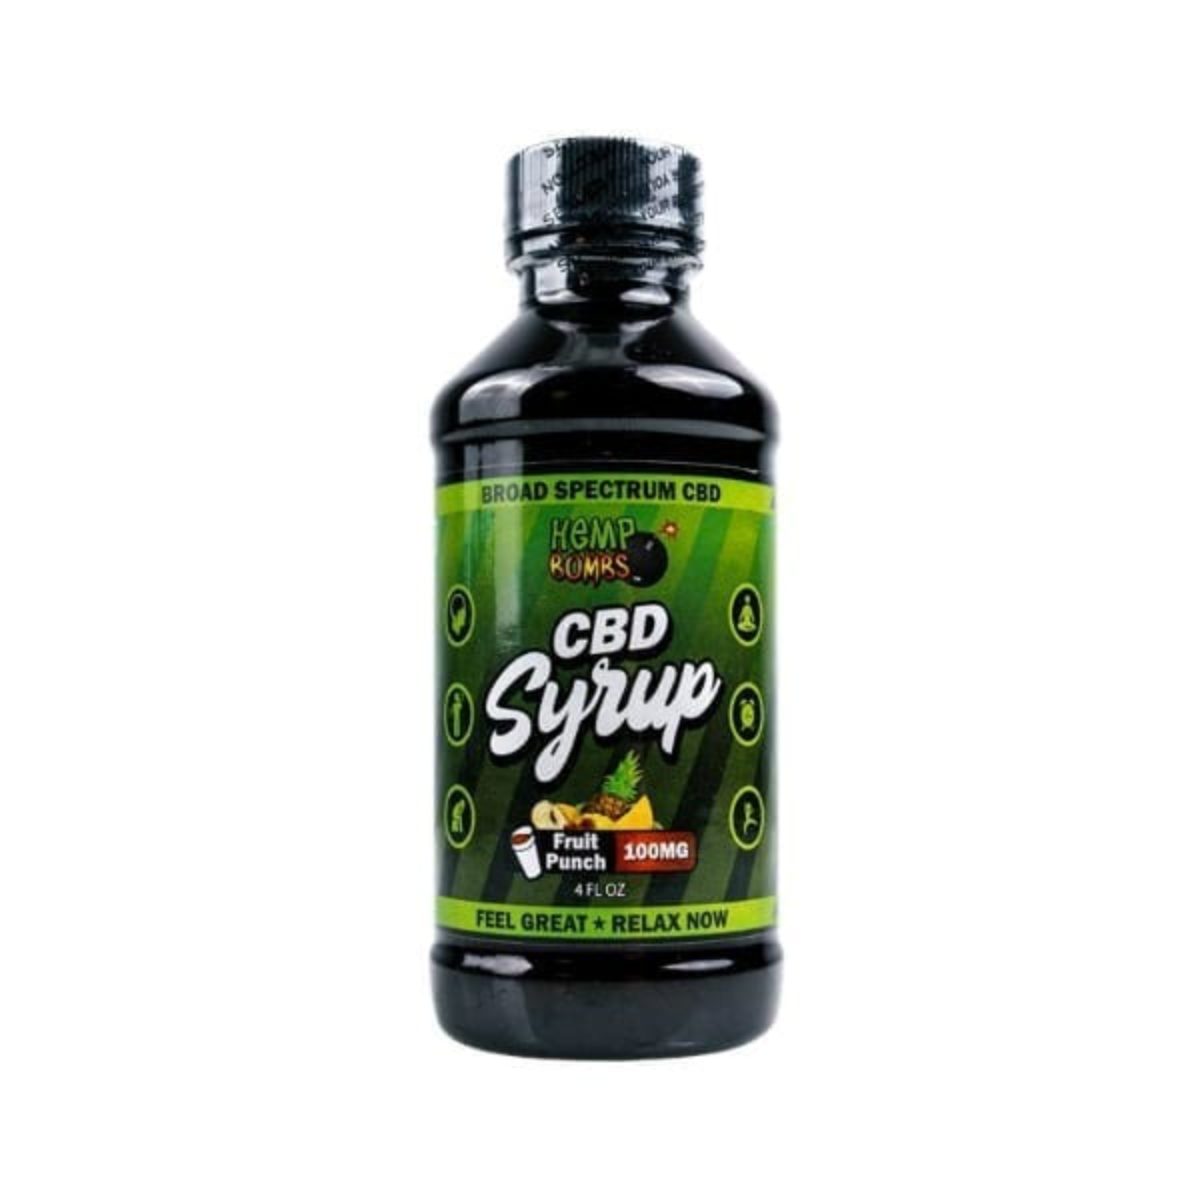 Hemp Bombs Syrup CBD 100mg 1 oz ( 4 servings)